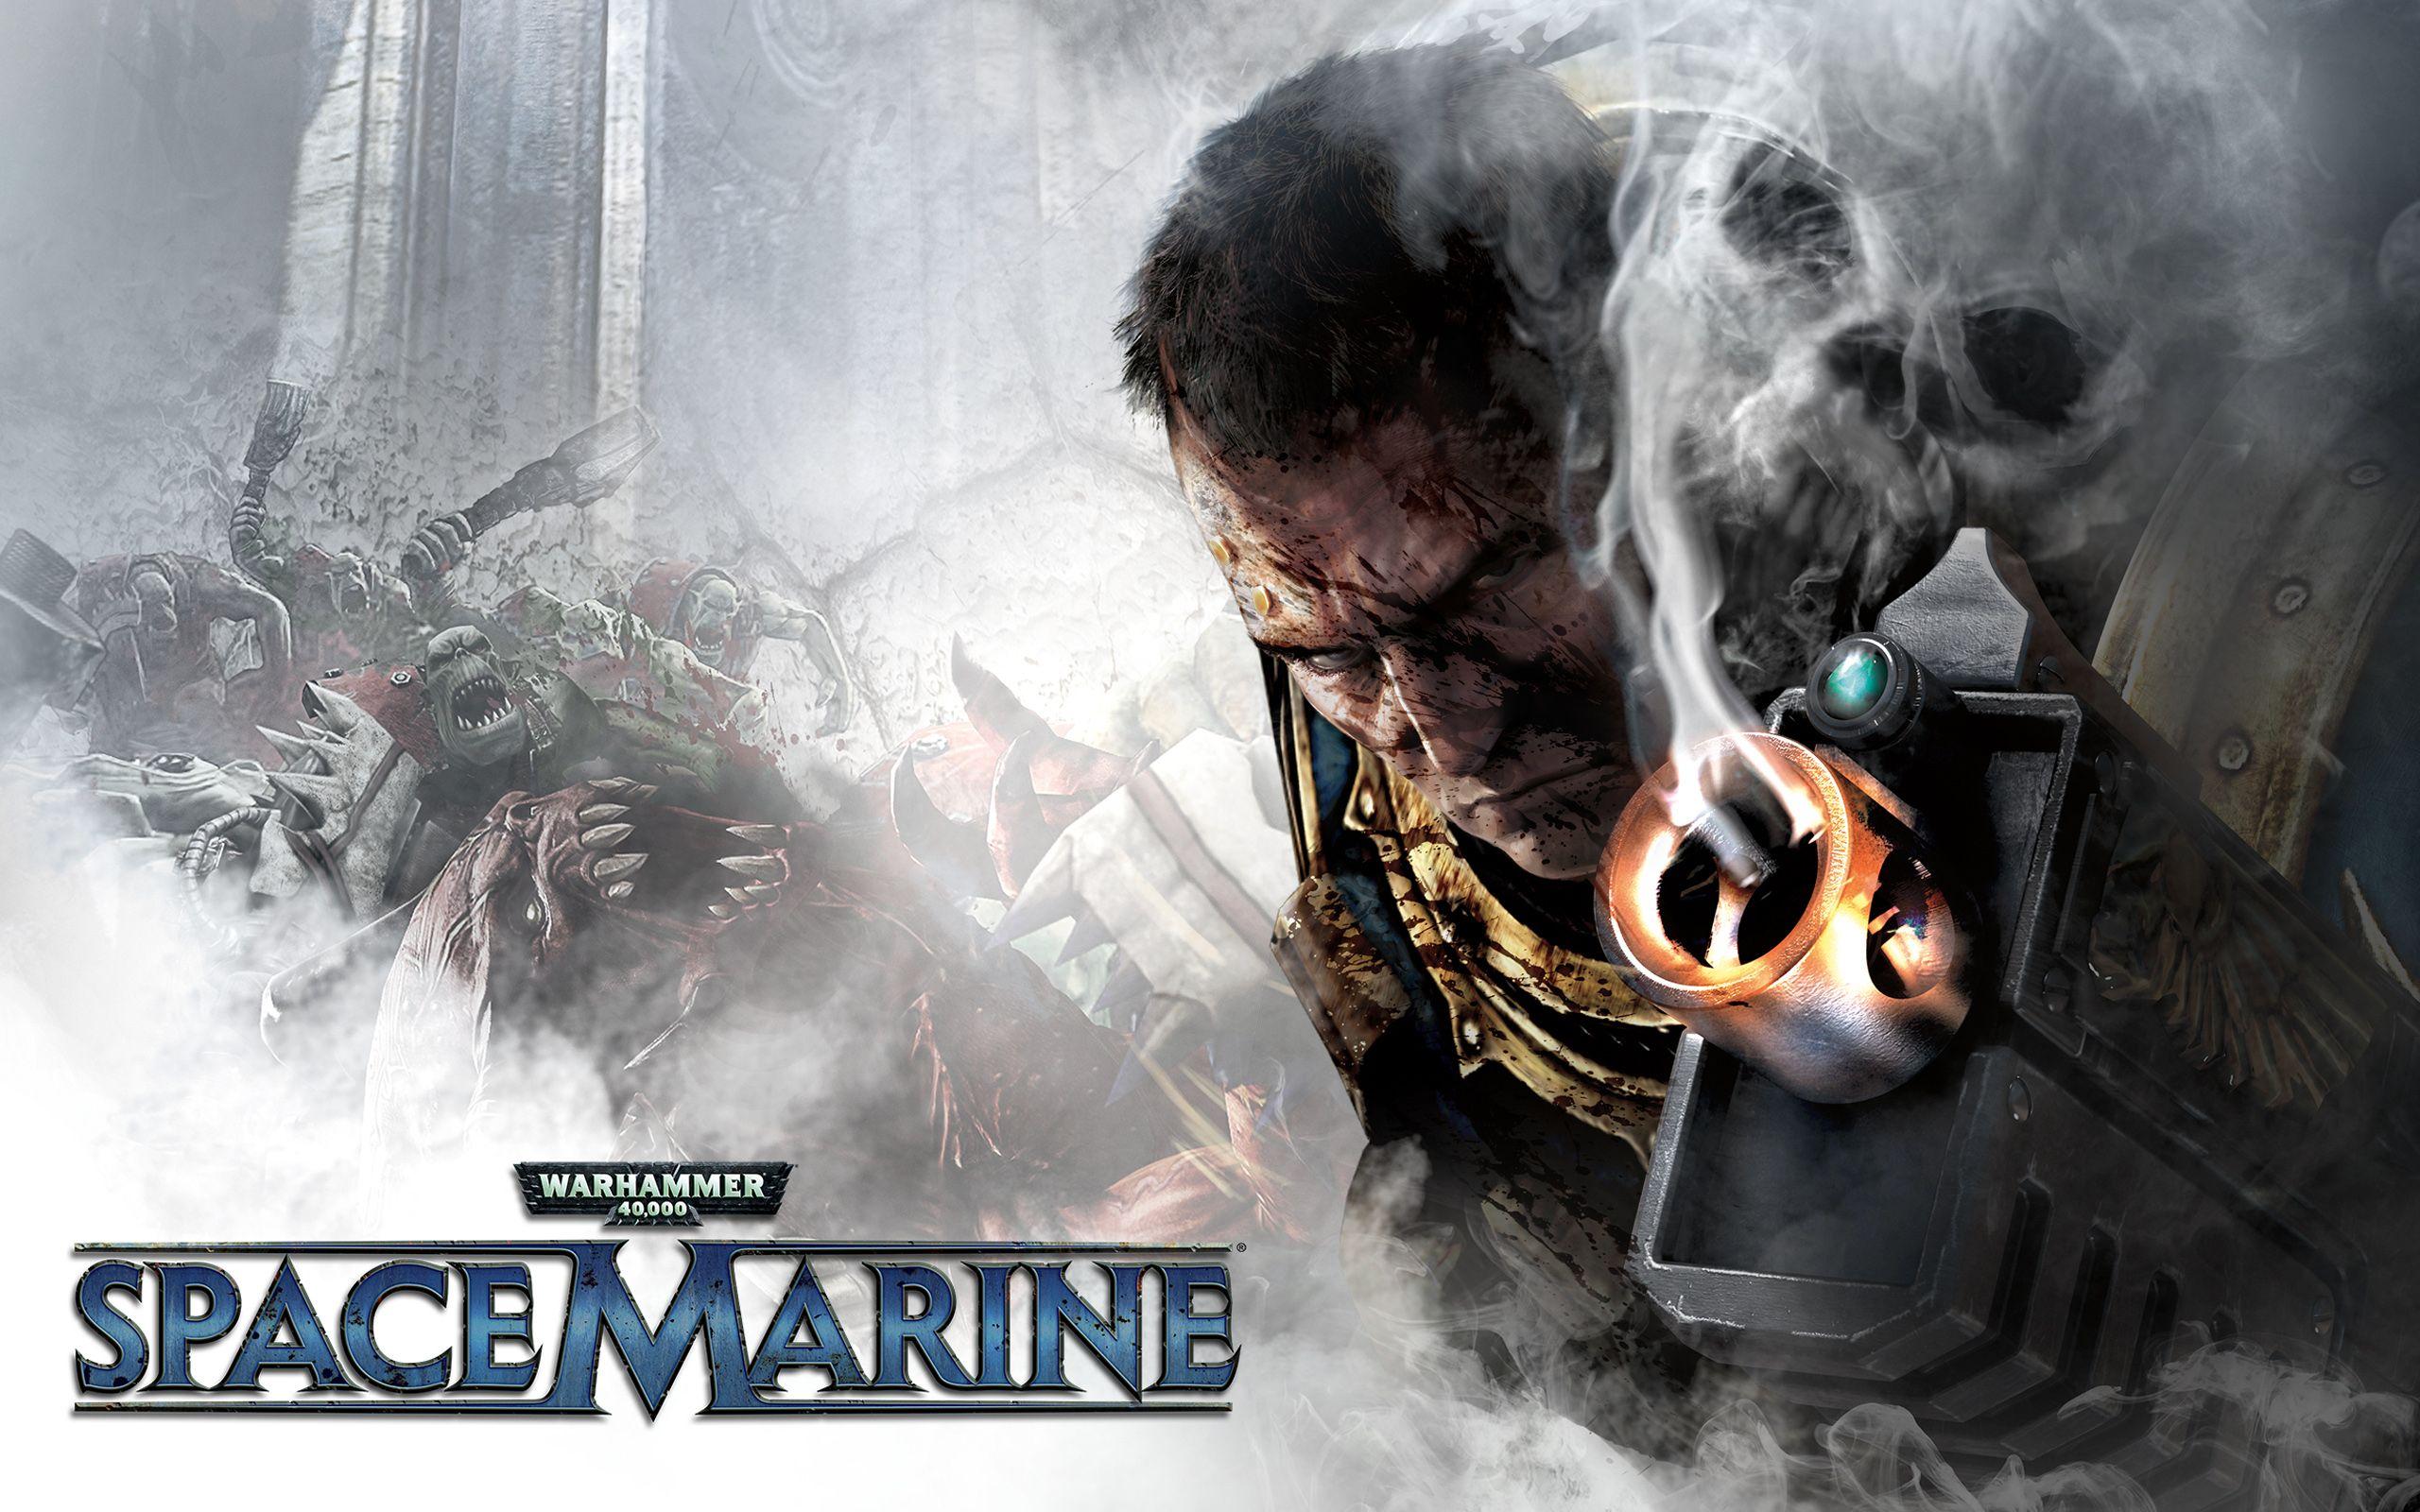 Warhammer Space Marine Game Wallpaper